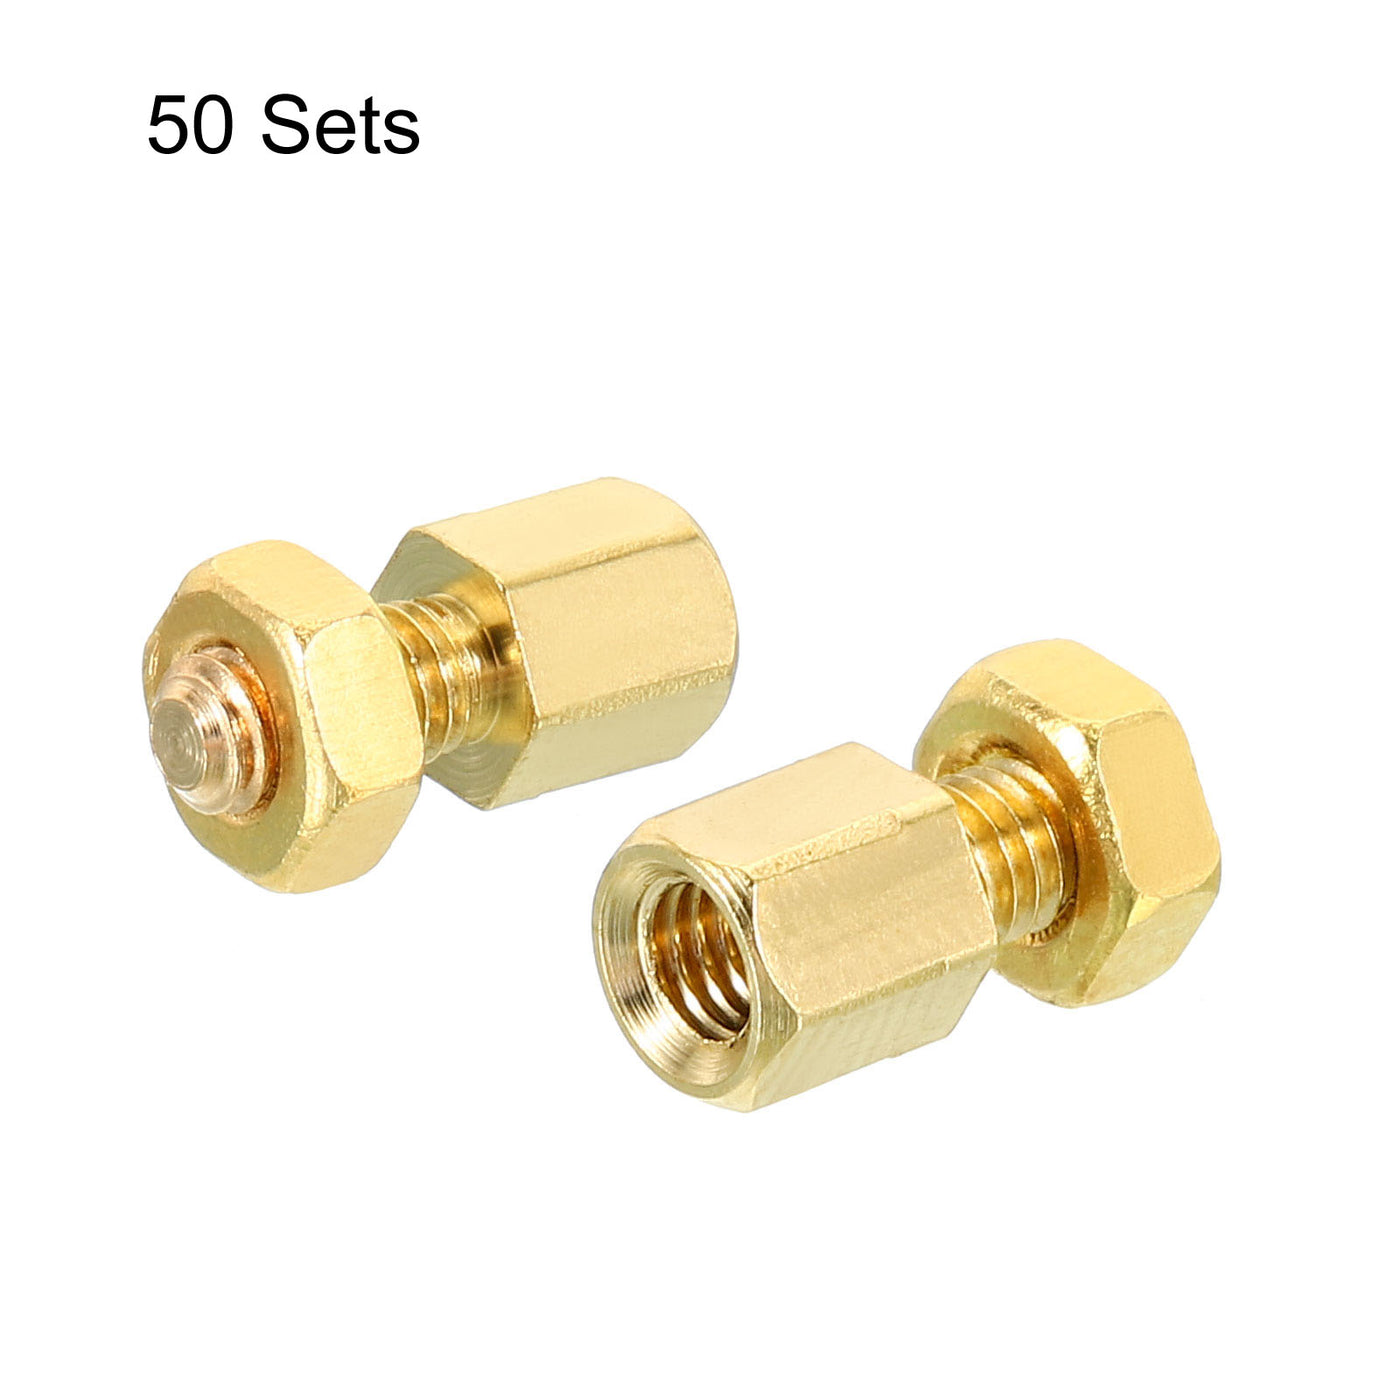 Harfington 5mm+6mm M3 Standoff Screws 100 Pack Brass Hex PCB Standoffs Nuts Gold Tone